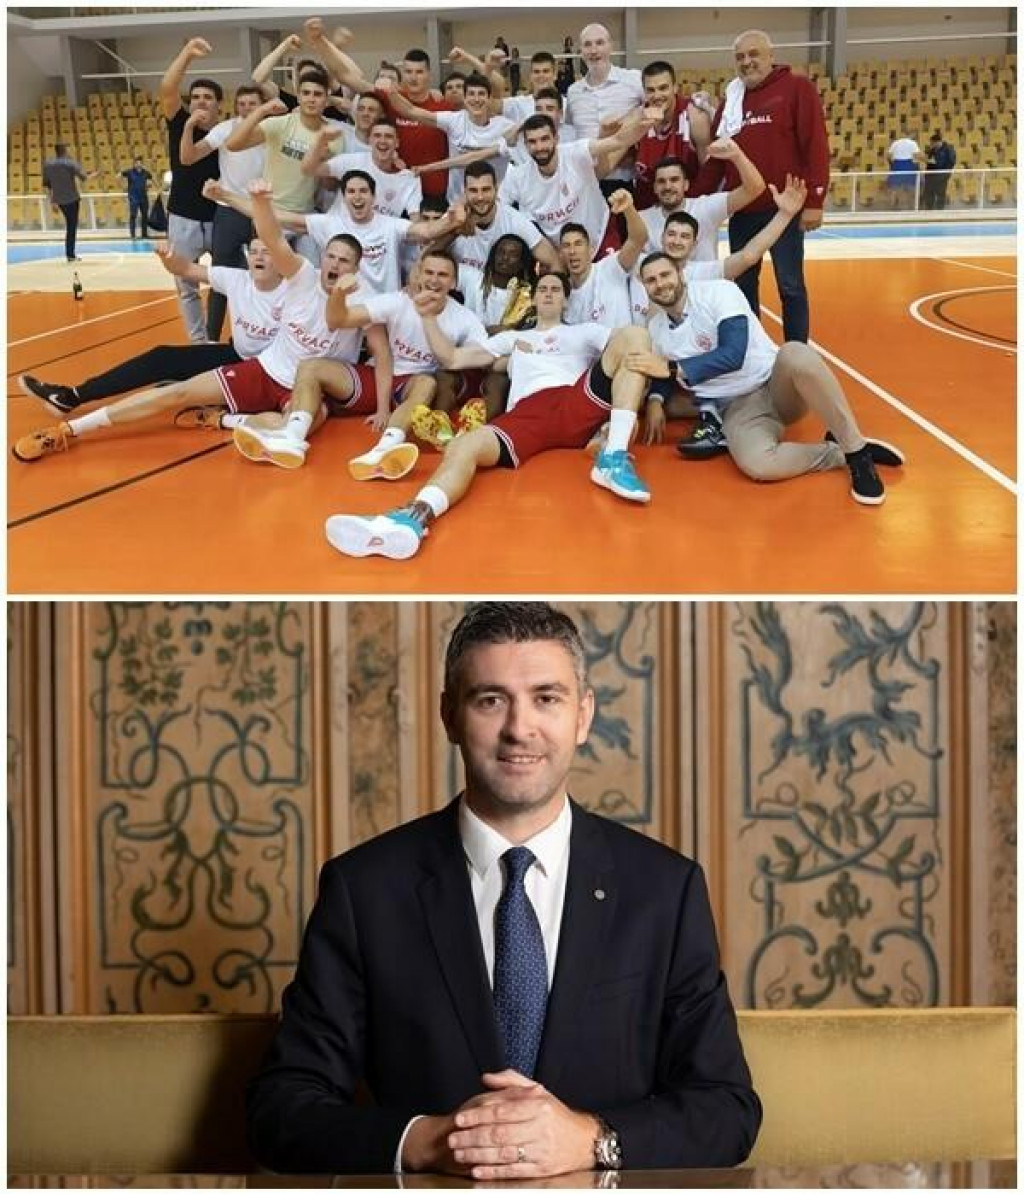 &lt;p&gt;Gradonačelnik Franković dubrovačkim košarkašima čestitao ulazak u Premier ligu&lt;/p&gt;